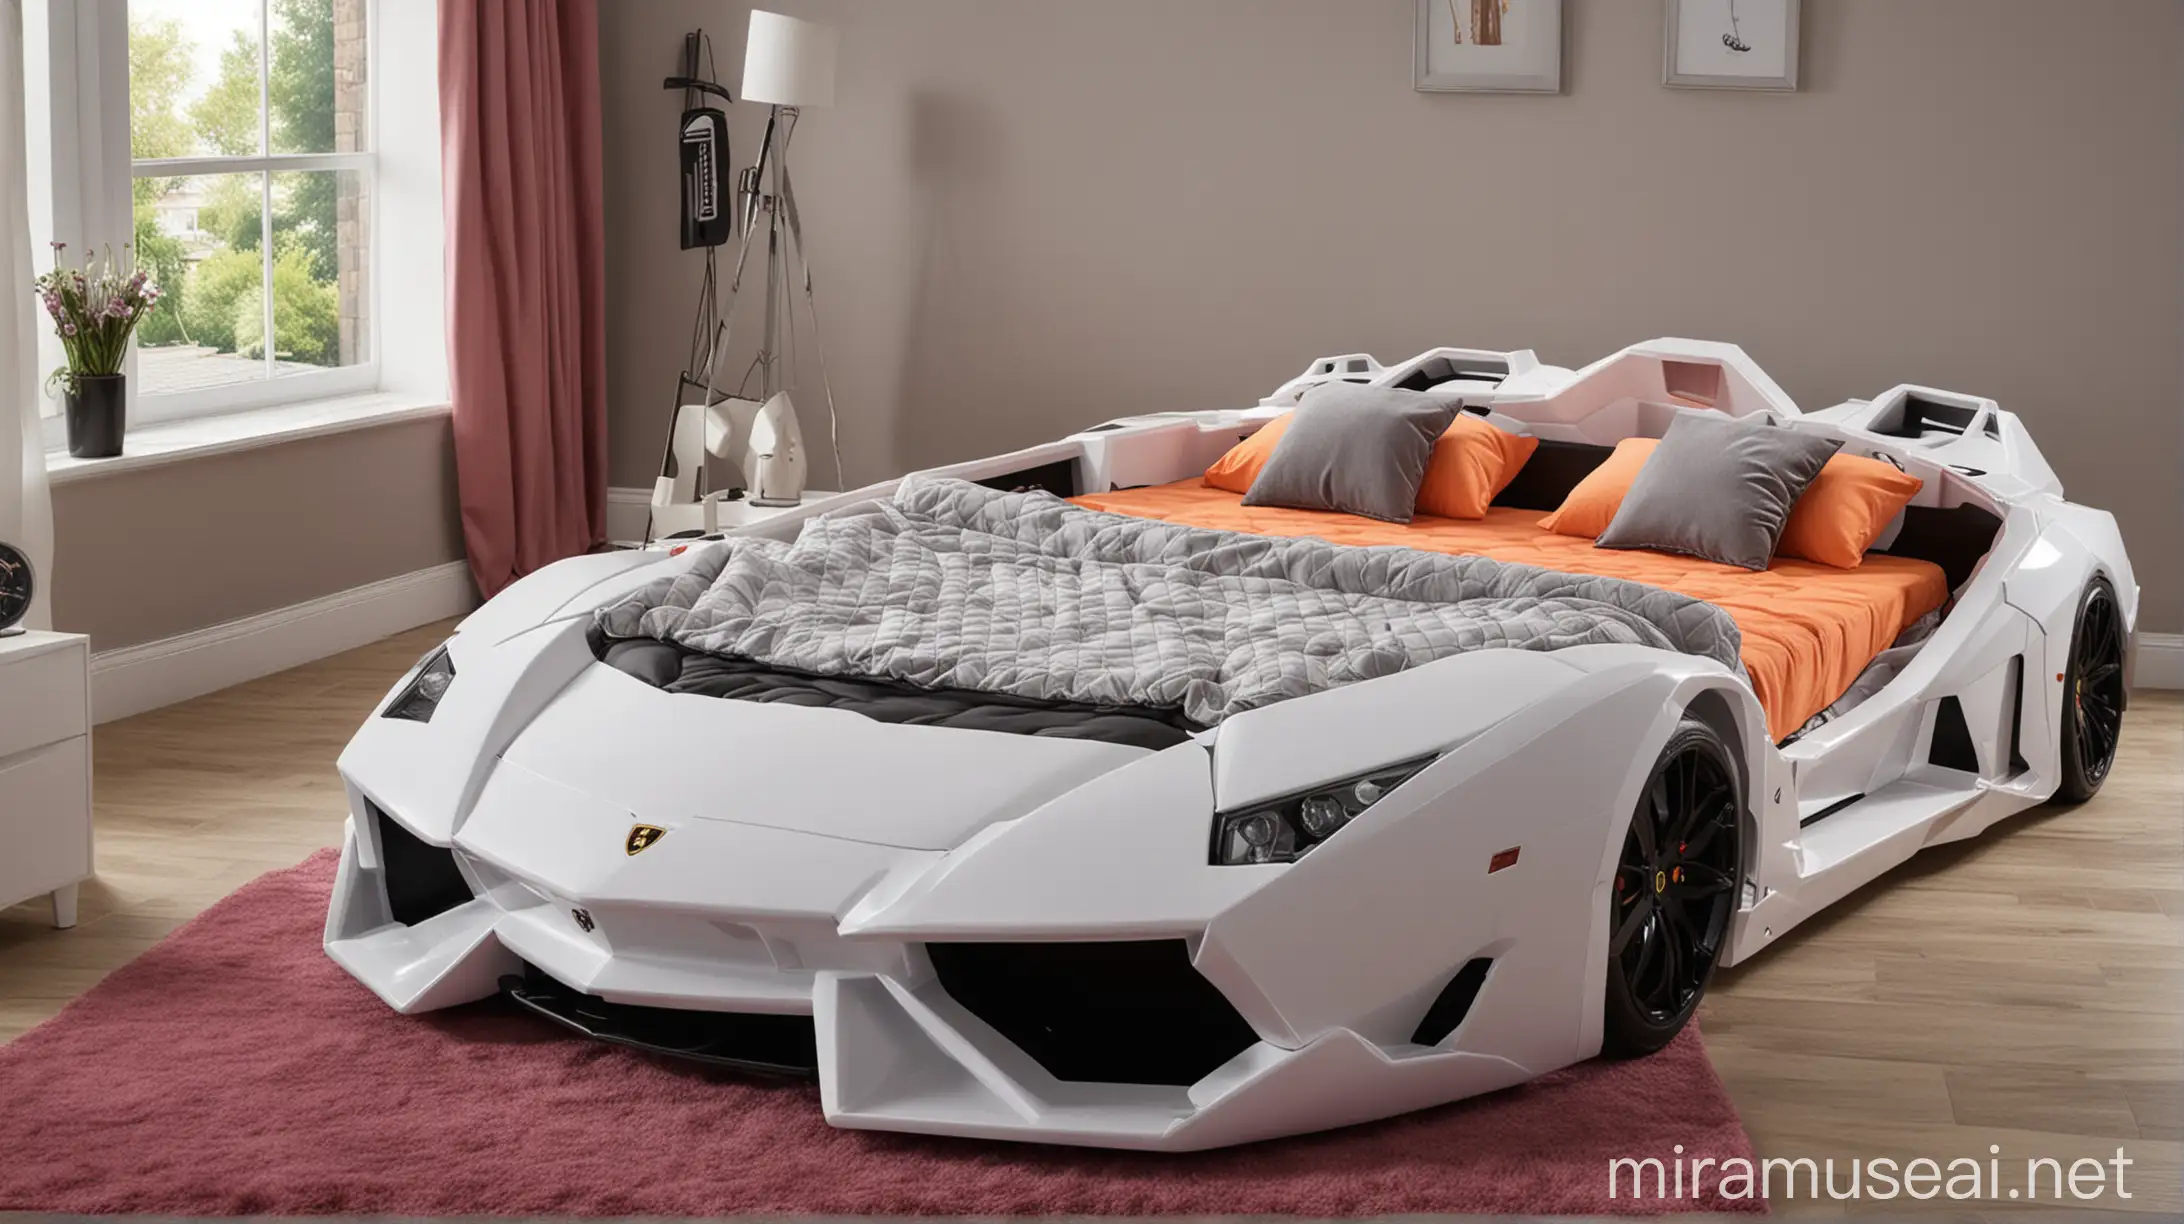 Double Lambarghini Car Shaped Sleeper Bed